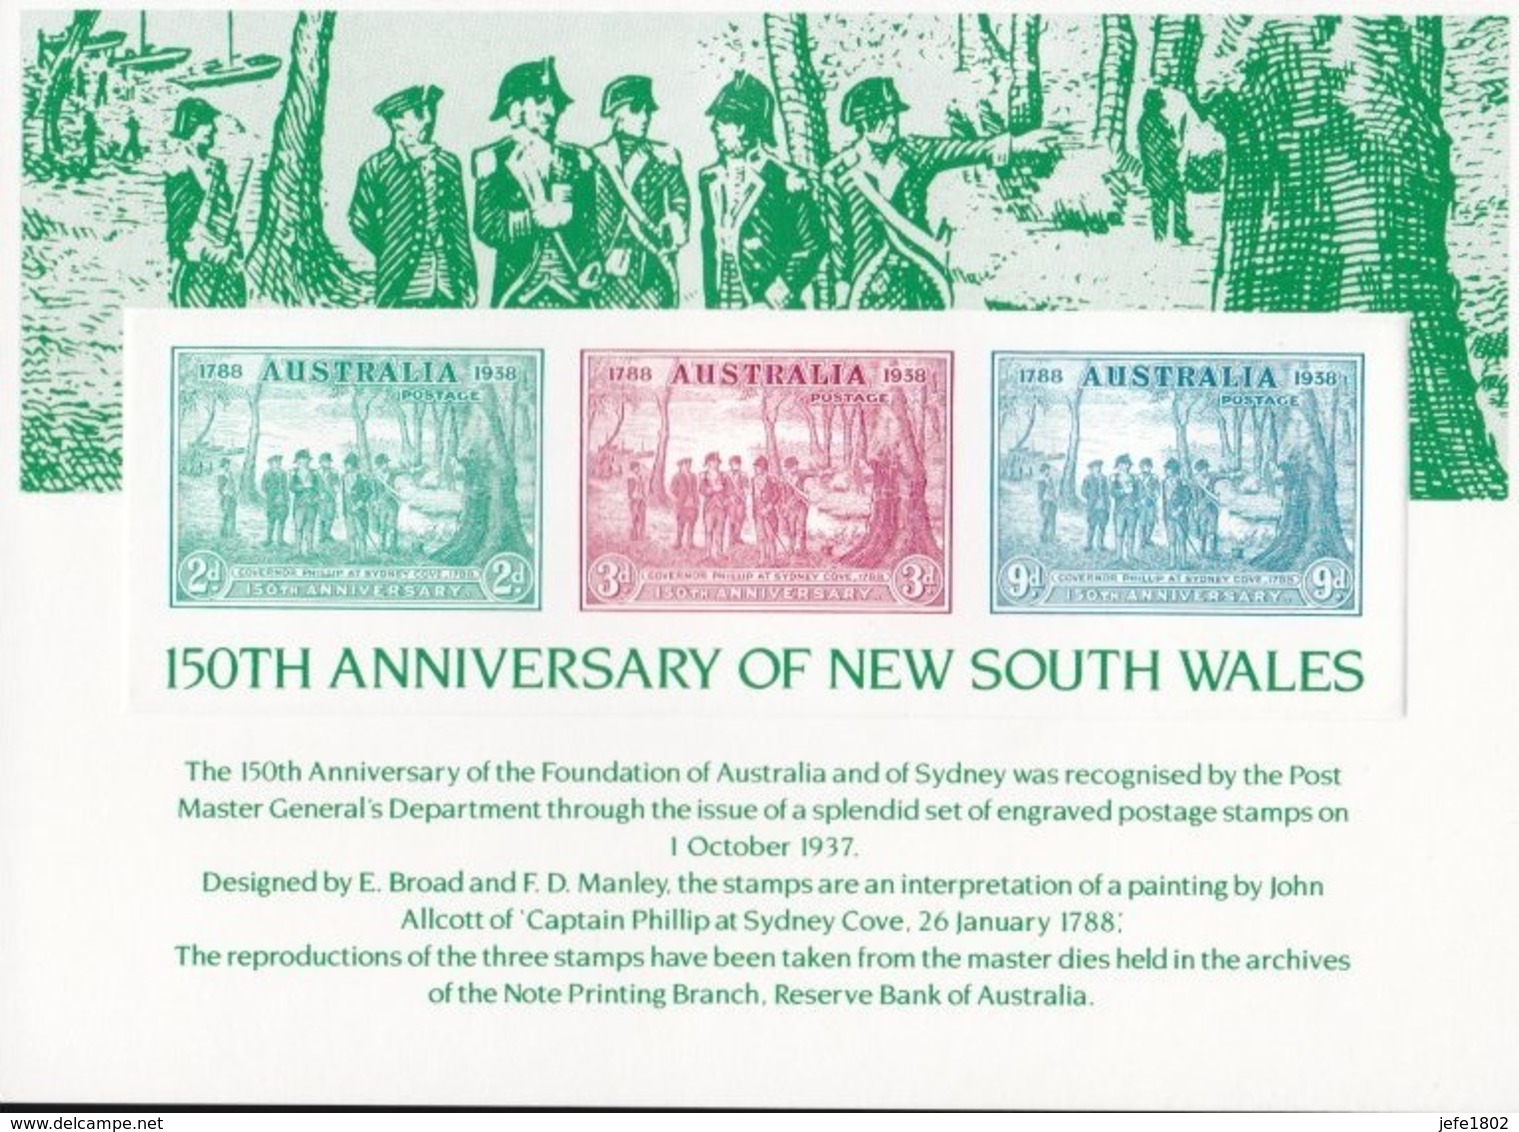 Facsimile Produced For The Australian Philatelic Federation, 1989 - Card N° 15 - Probe- Und Nachdrucke